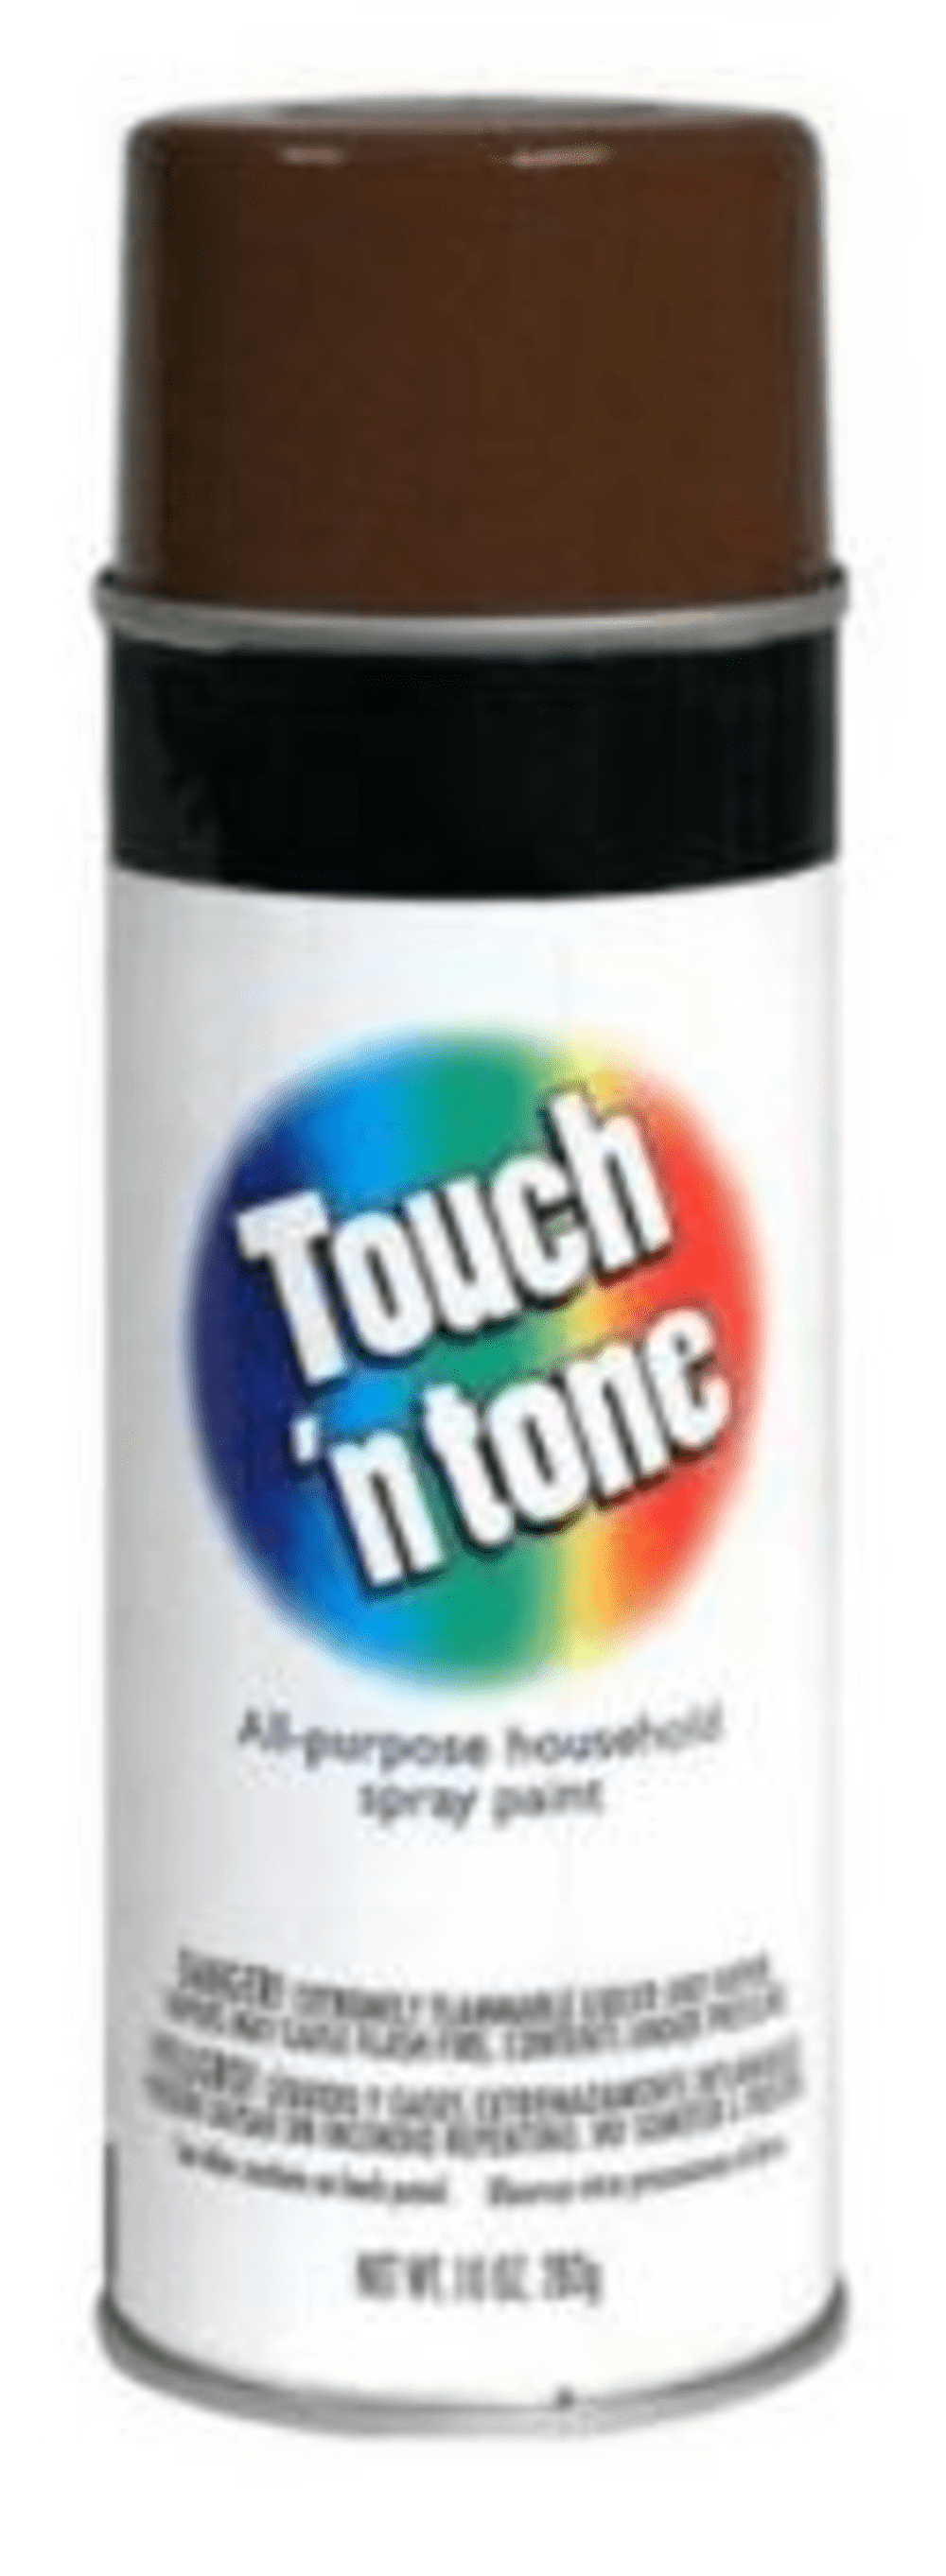 Touch n' Tone Spray Paint Gloss